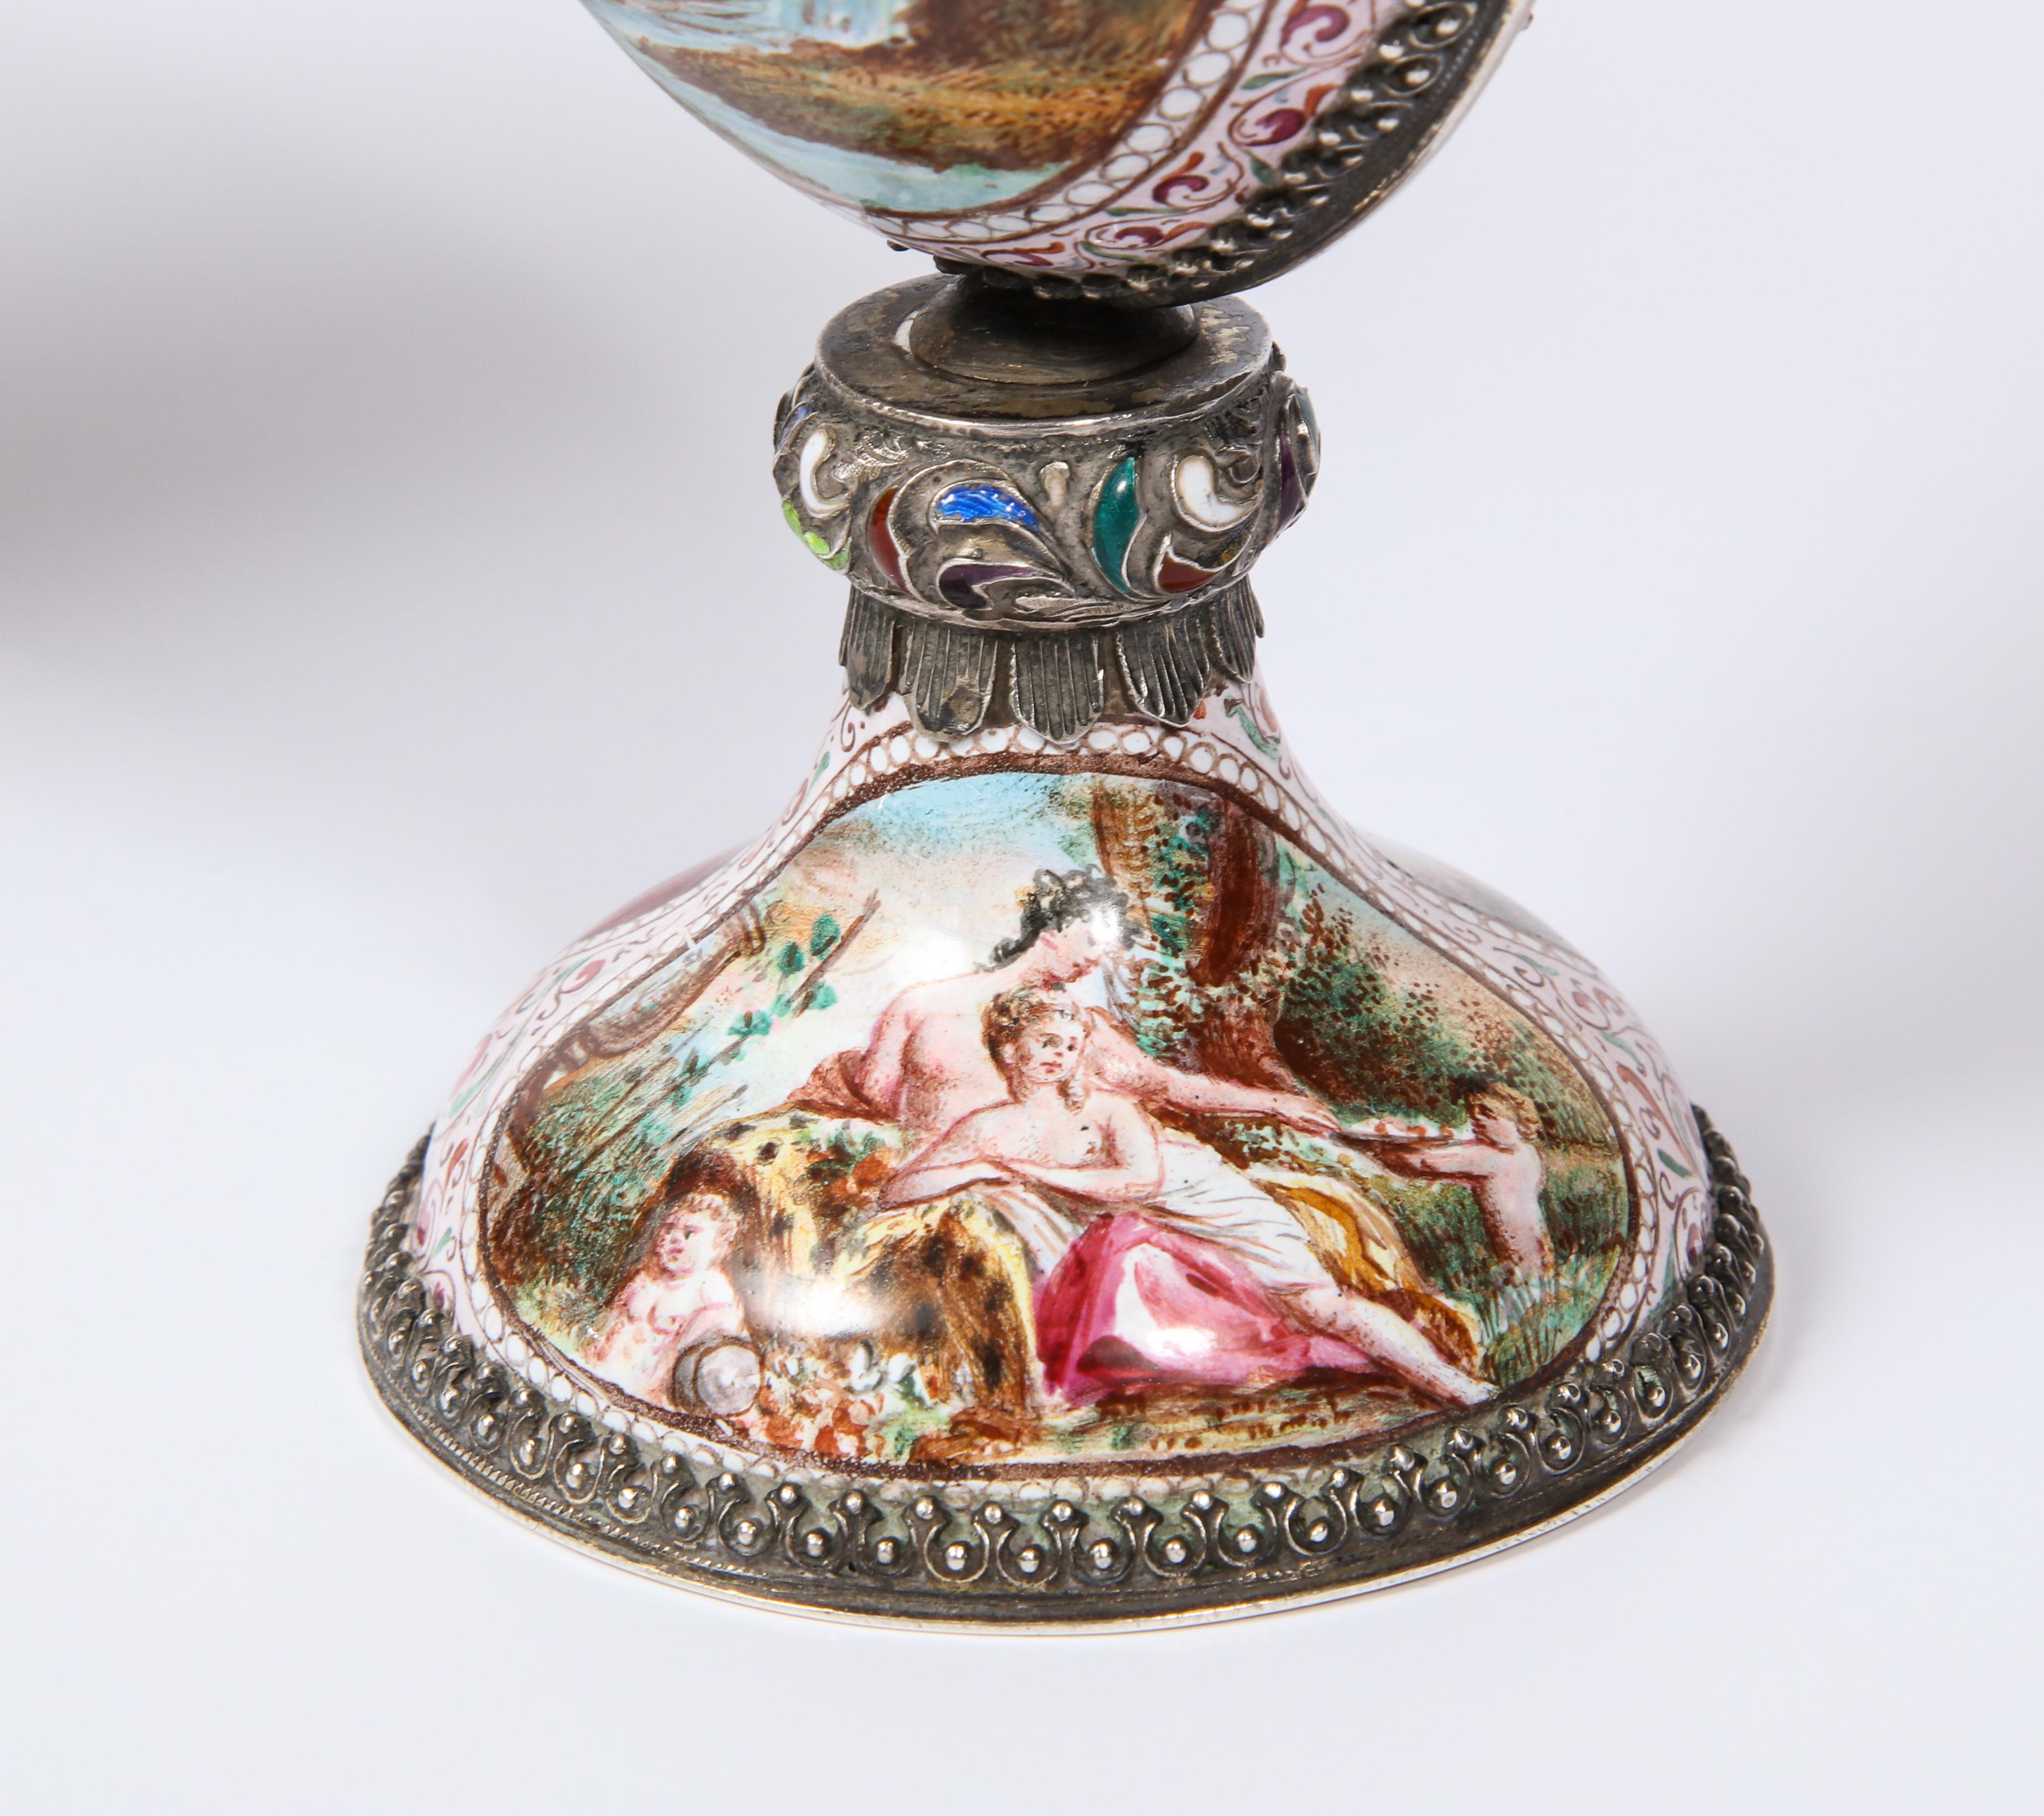 Pr. Viennese Enamel on Silver Vases with Mythological Scenes Signed Hallmarks HB 10